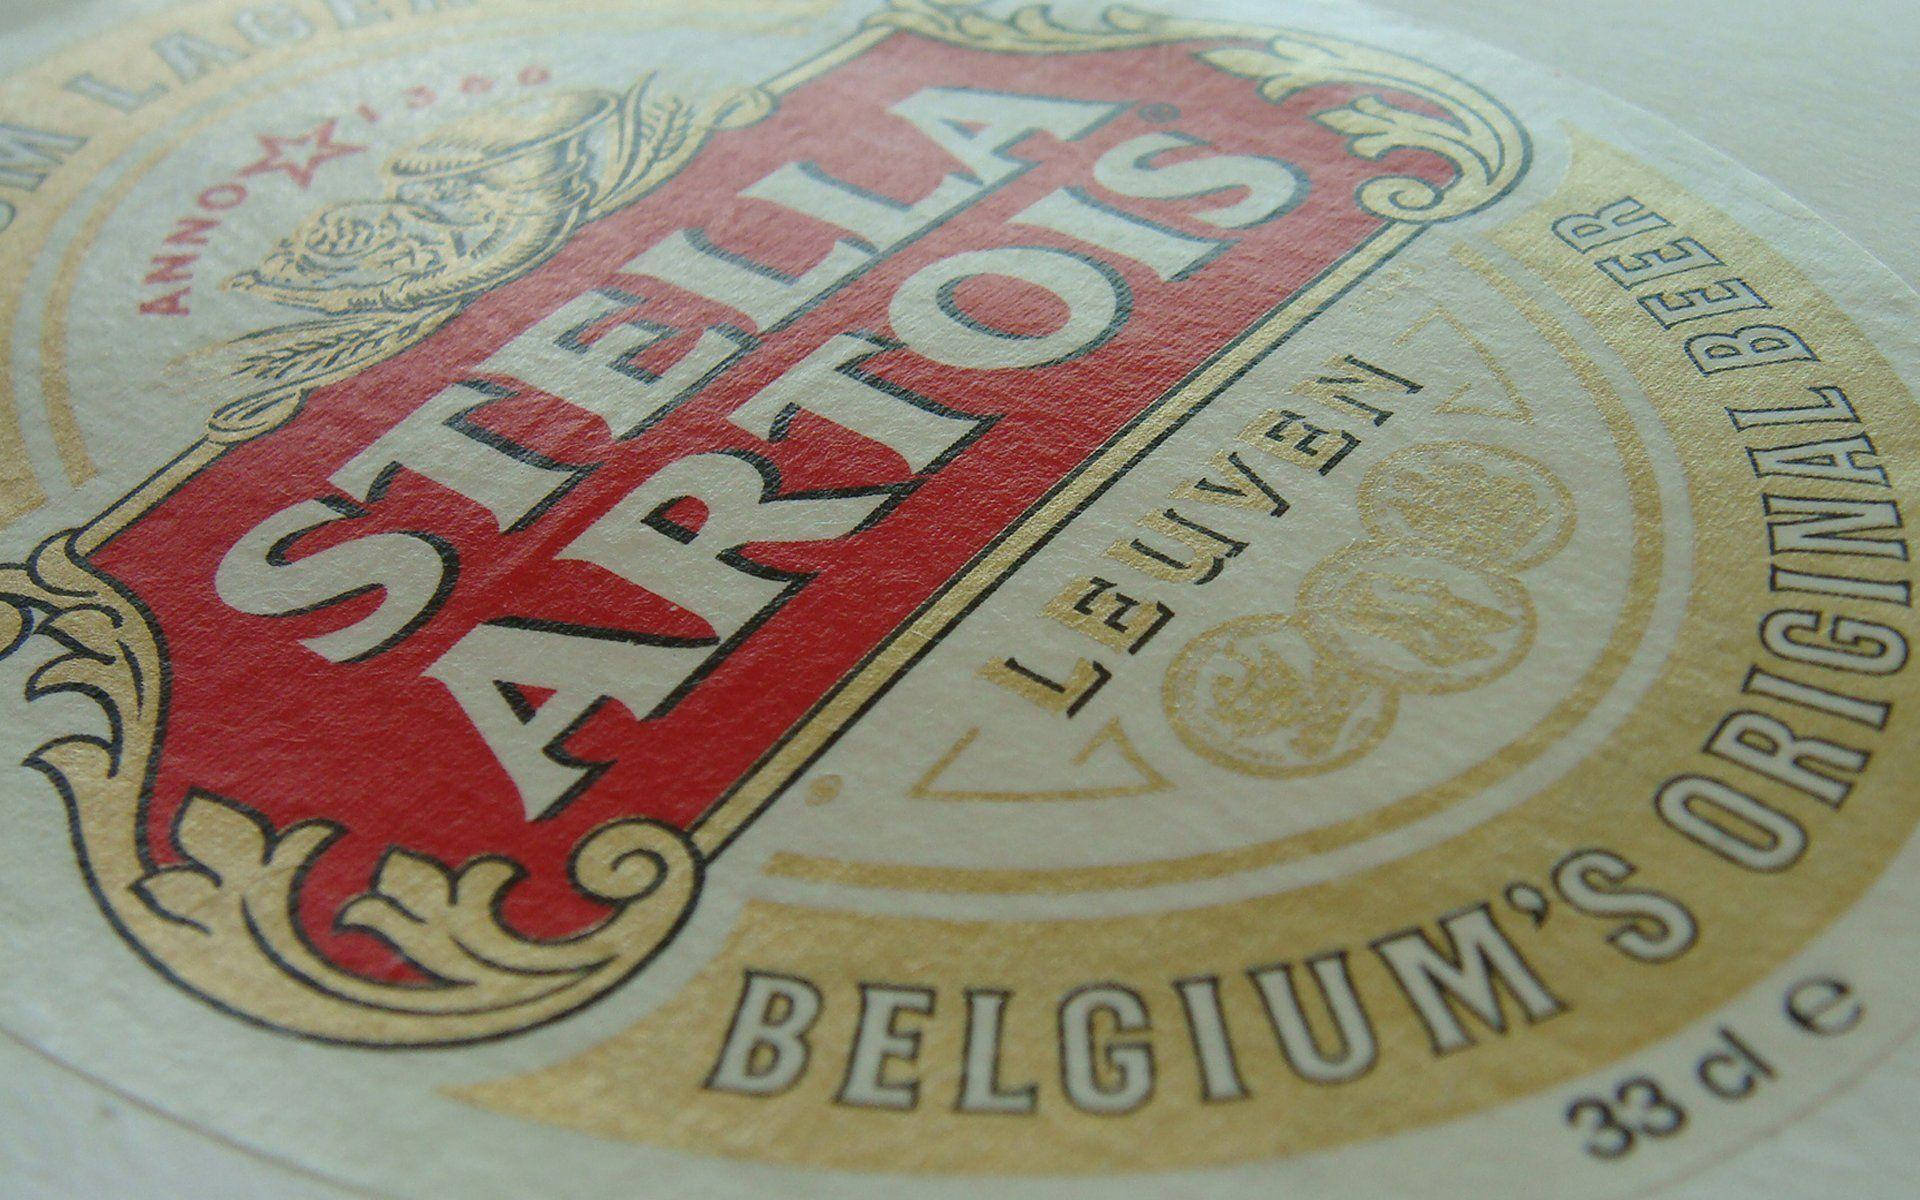 Belgium’s Original Beer Stella Artois Wallpaper